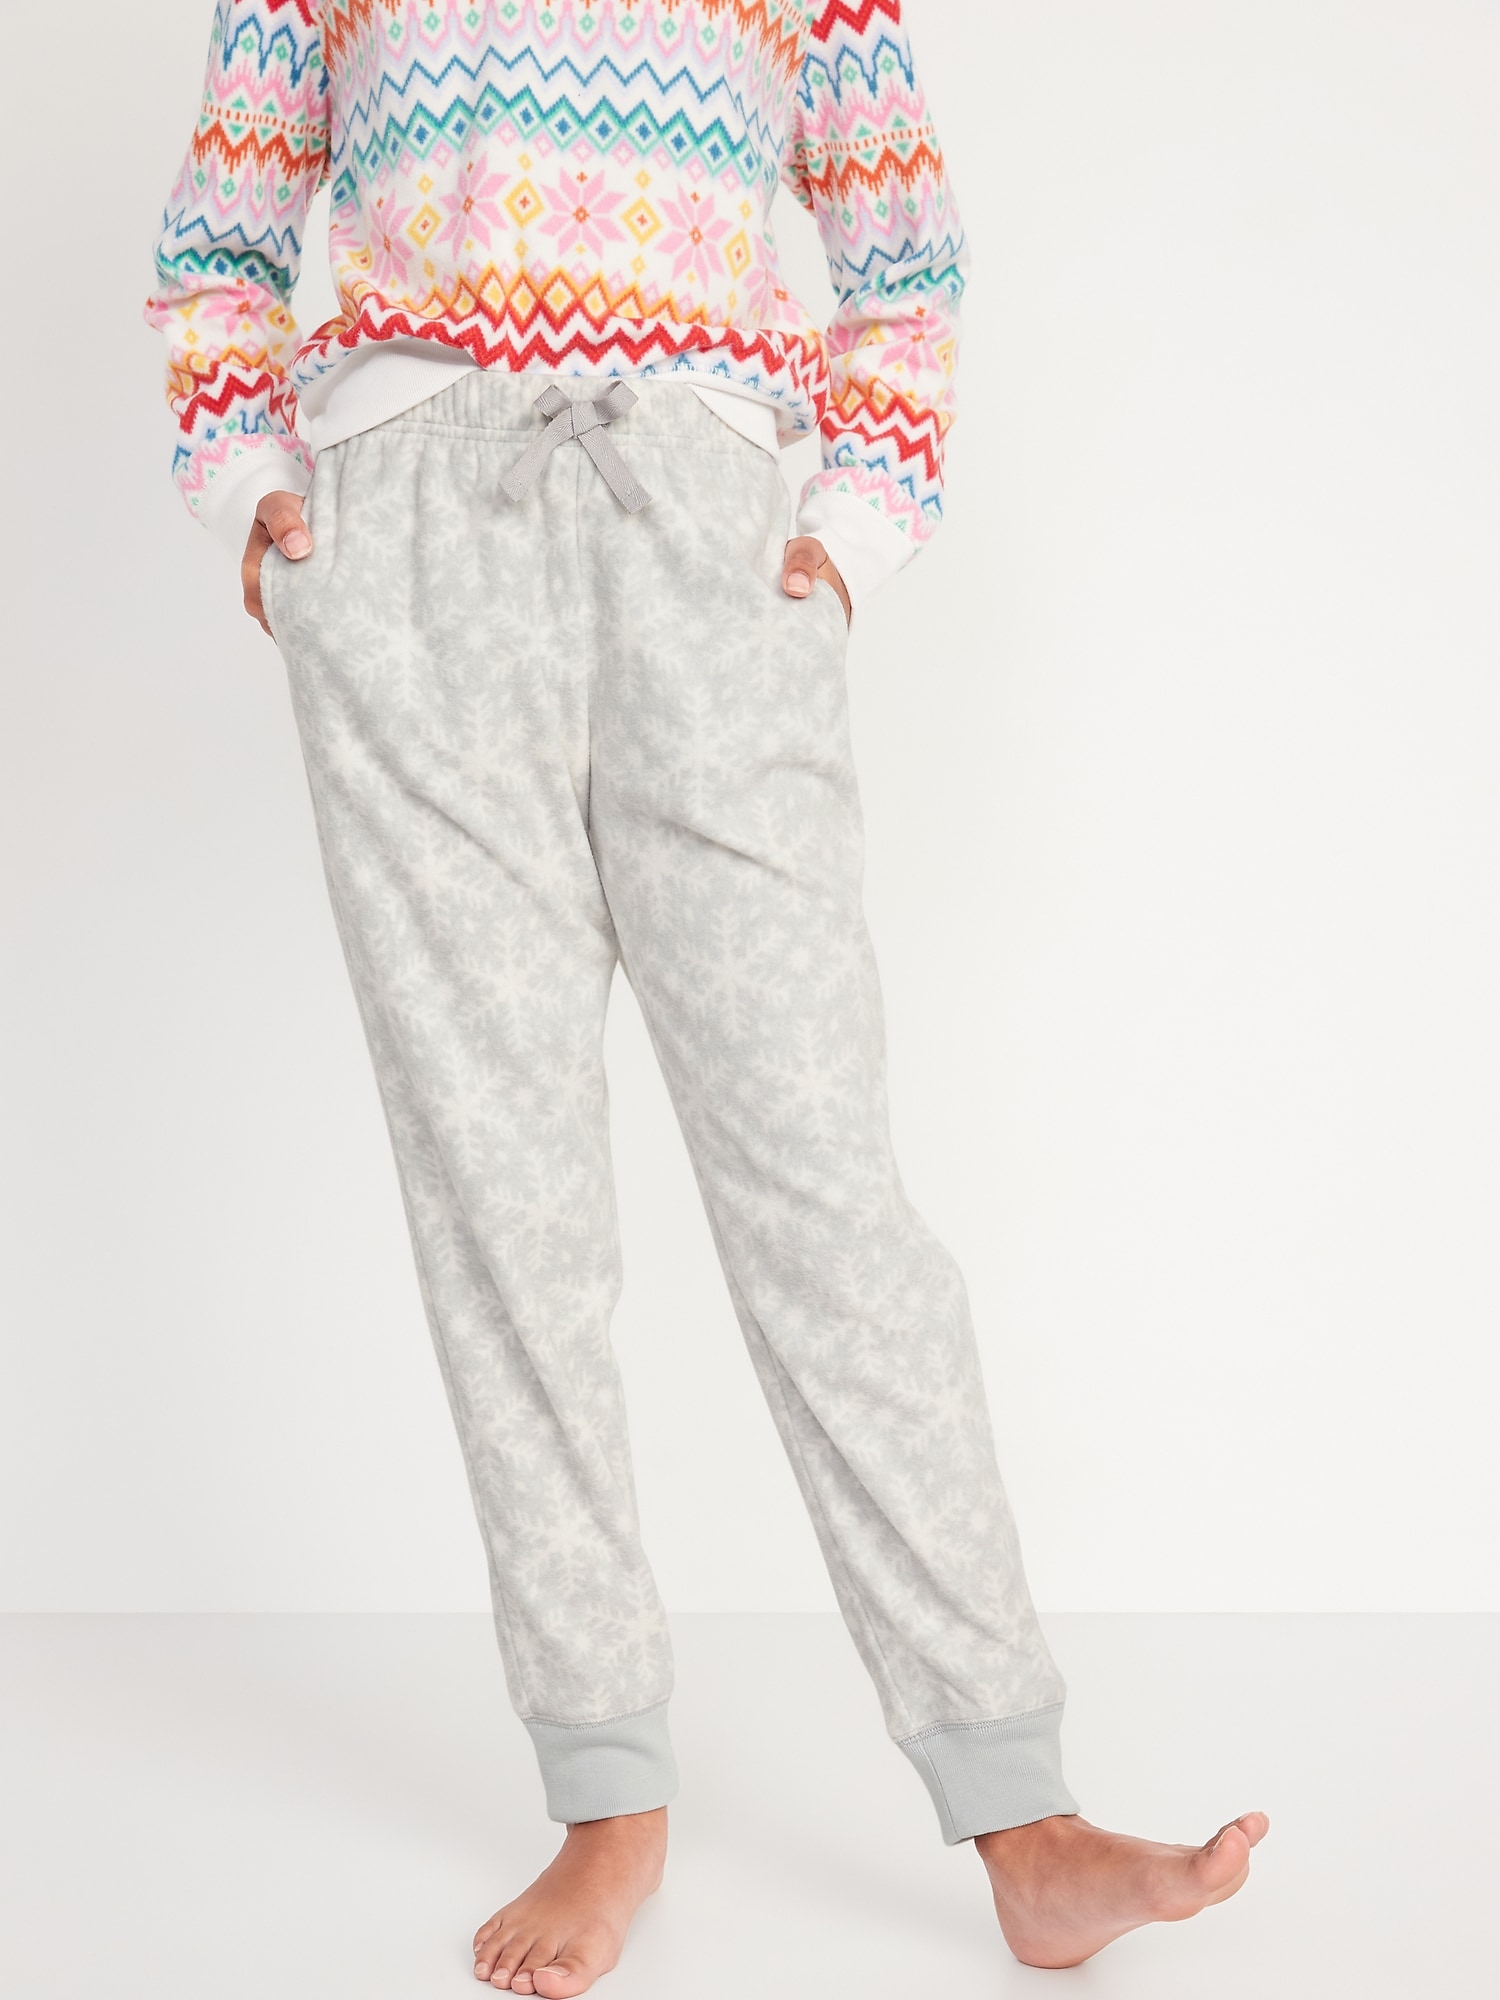 Oldnavy Printed Microfleece Pajama Jogger Pants for Girls Hot Deal